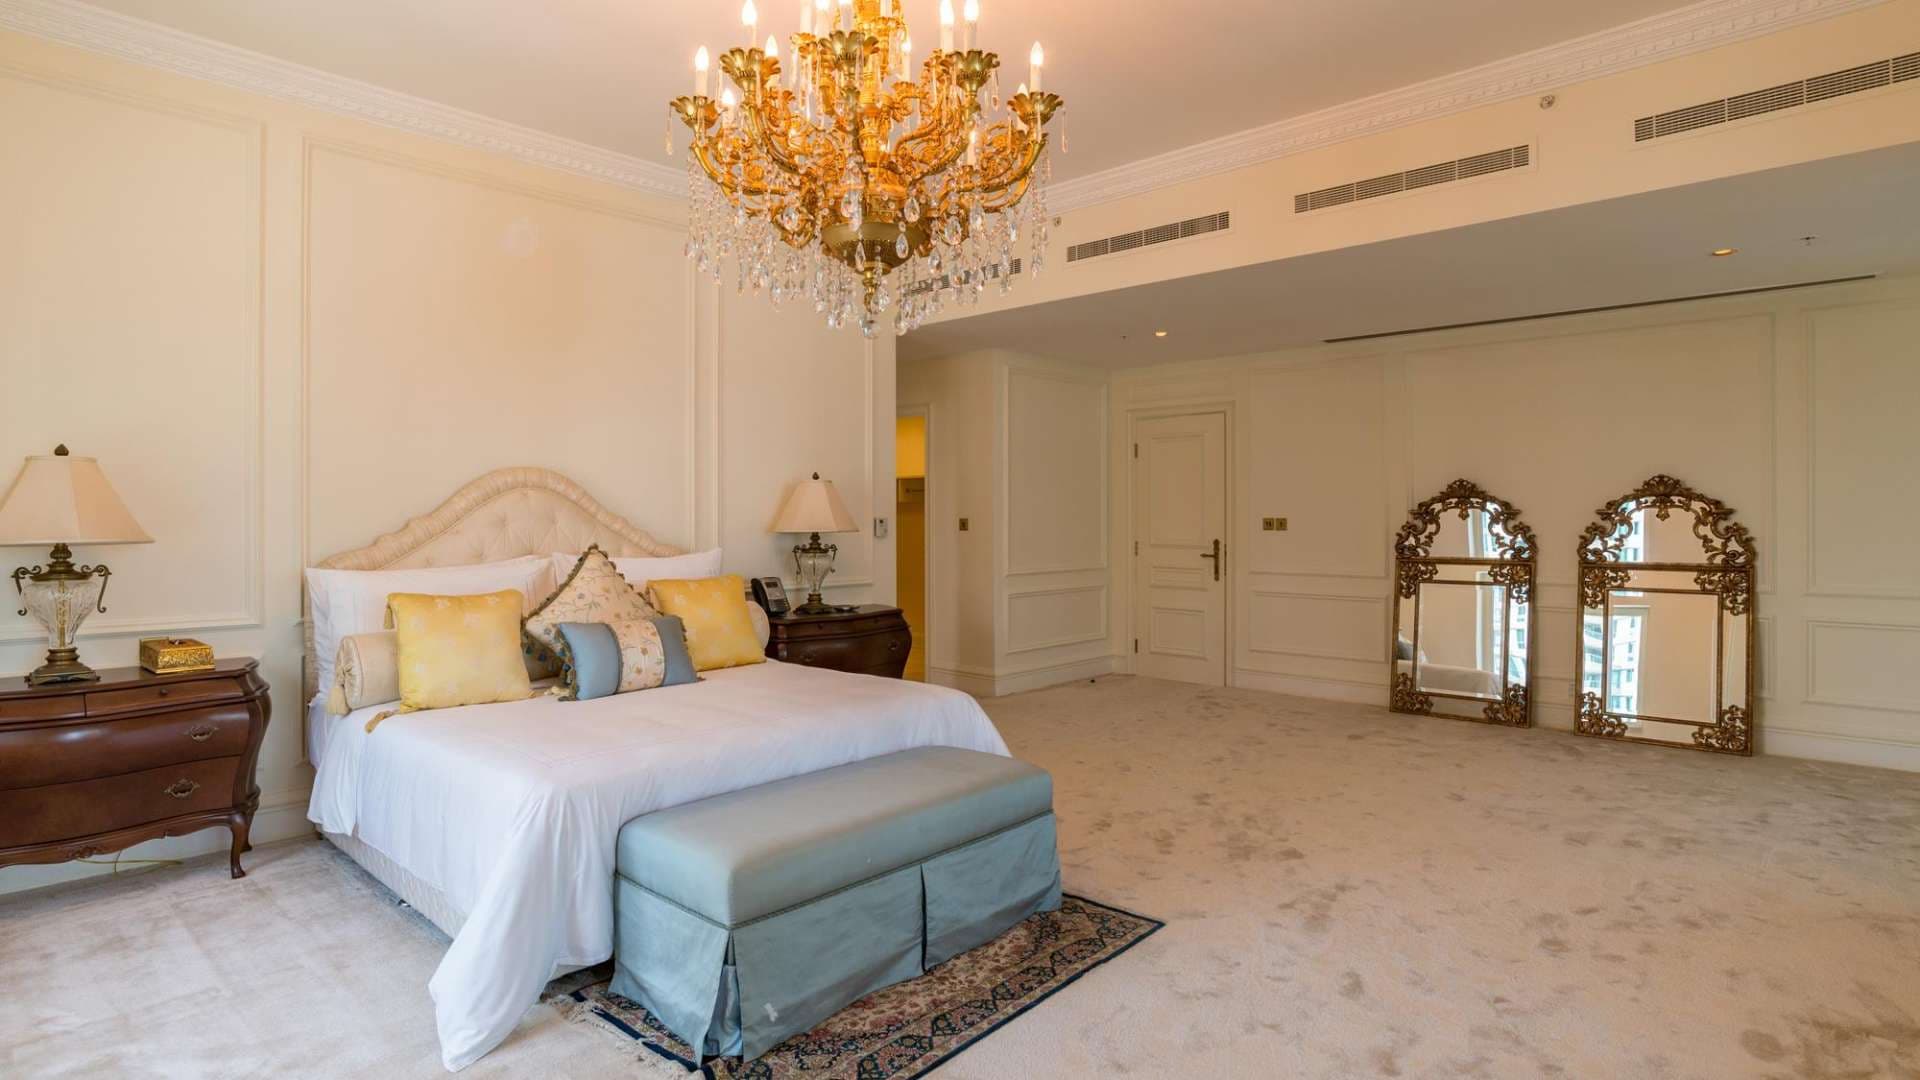 5 Bedroom Penthouse For Sale Al Anbar Tower Lp06941 1b4567ce63d59700.jpg